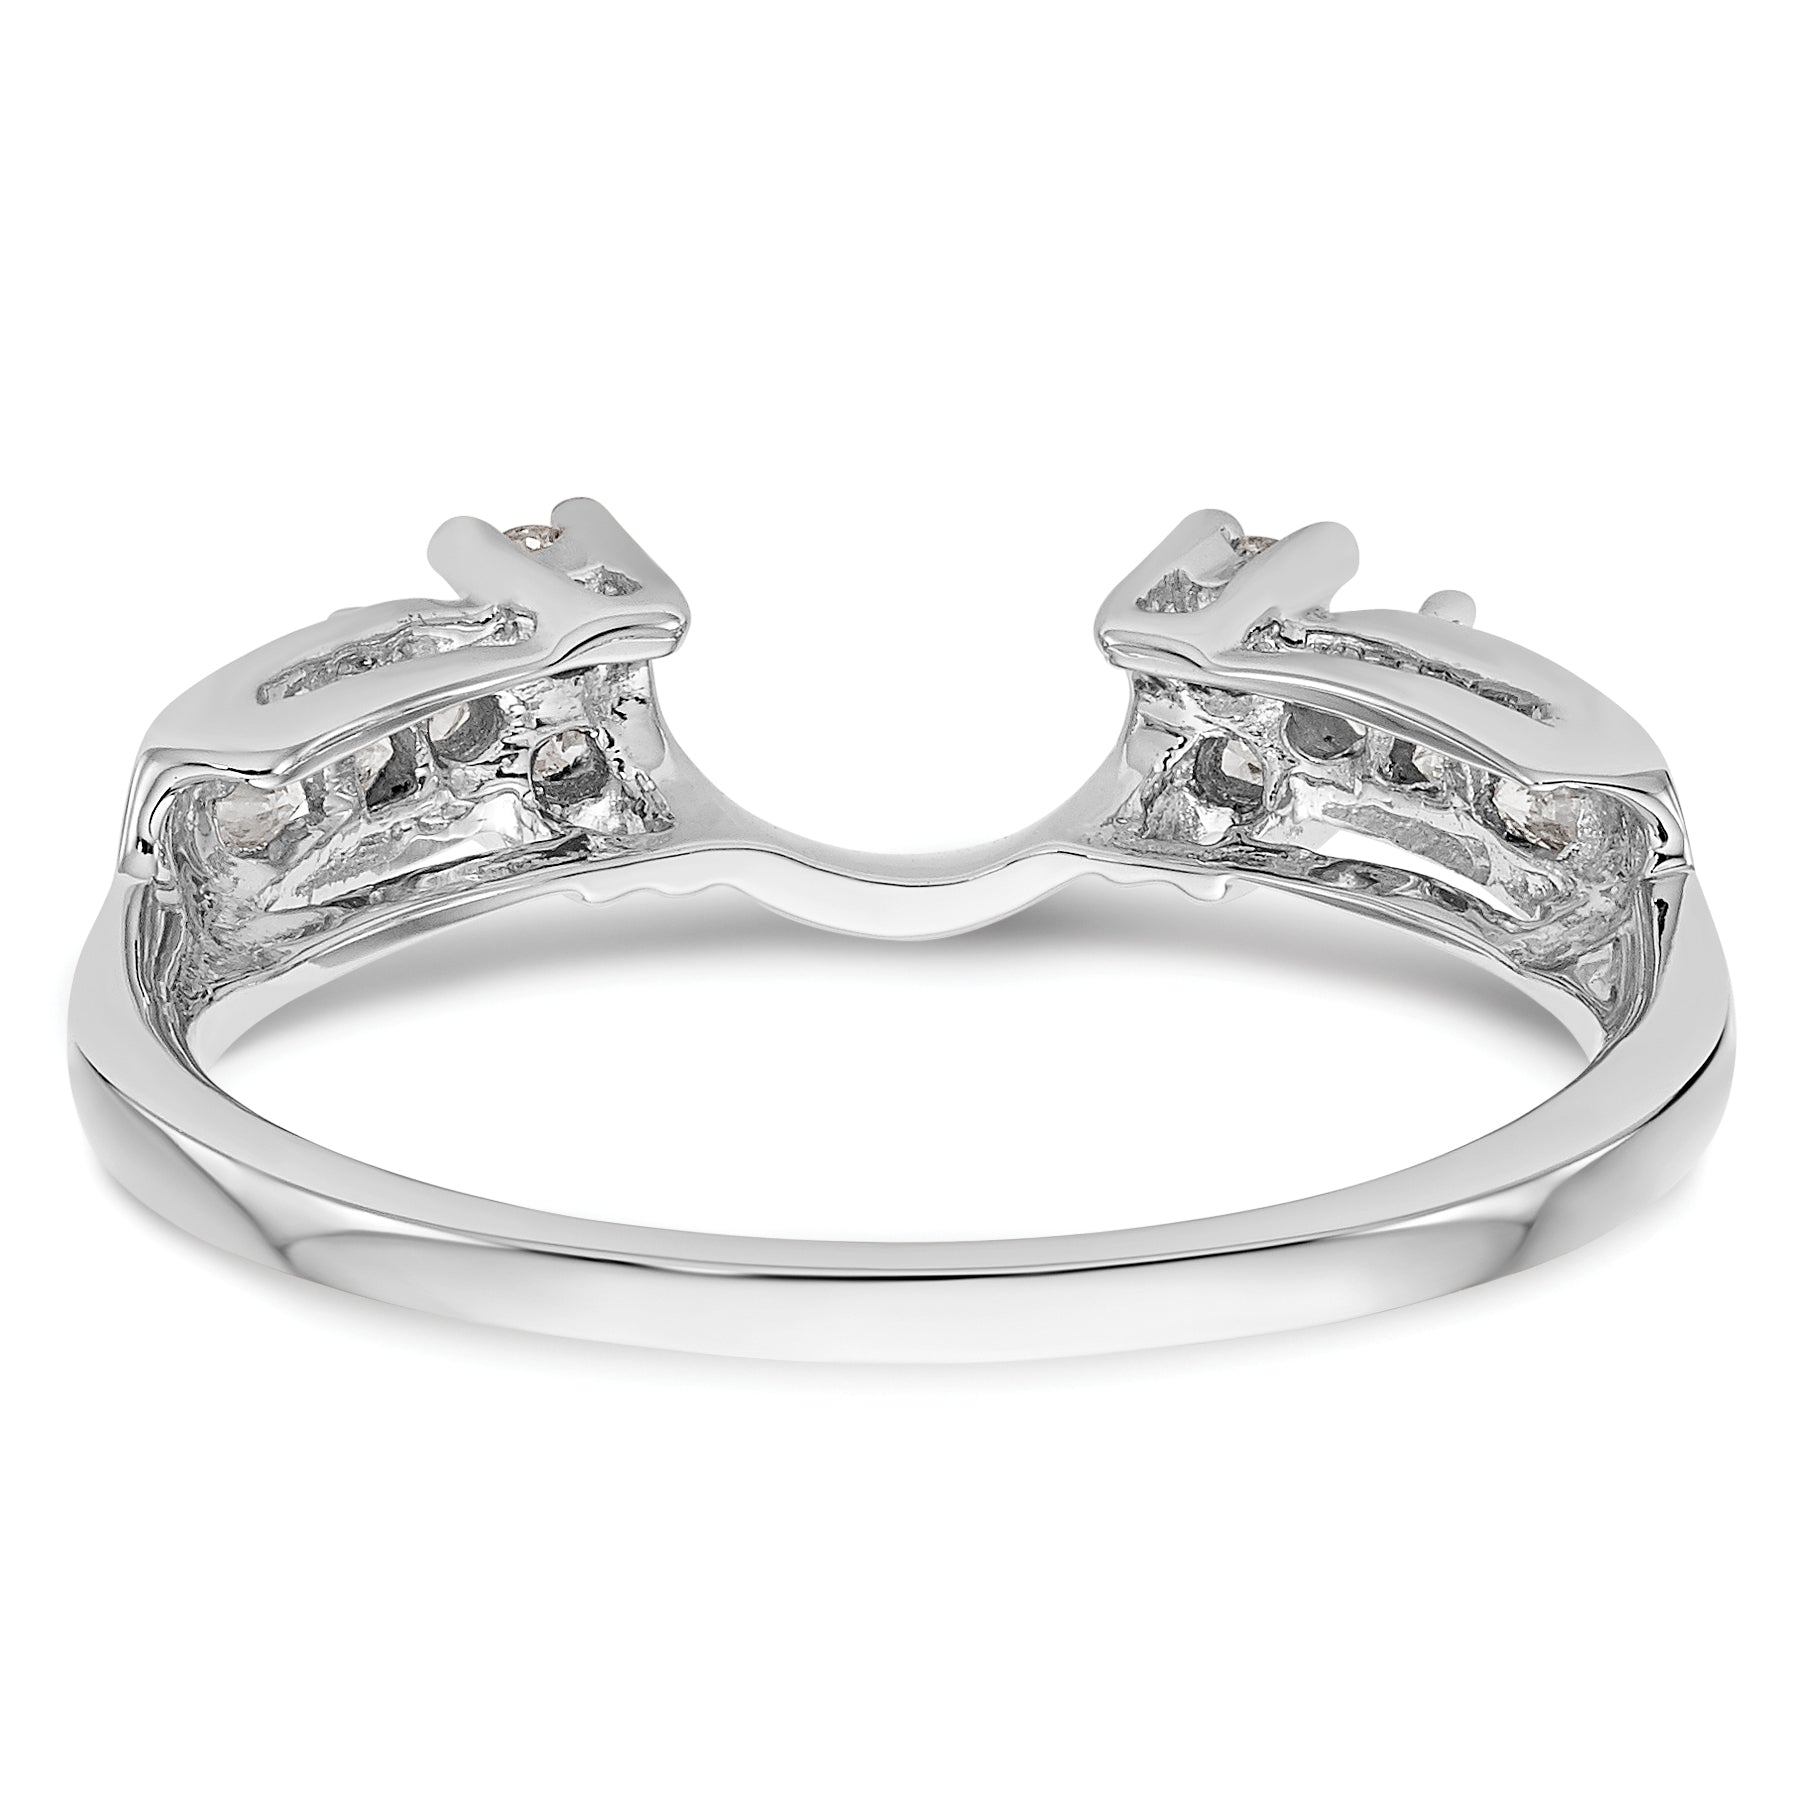 14K White Gold 1/4 carat Diamond Complete Wrap Ring